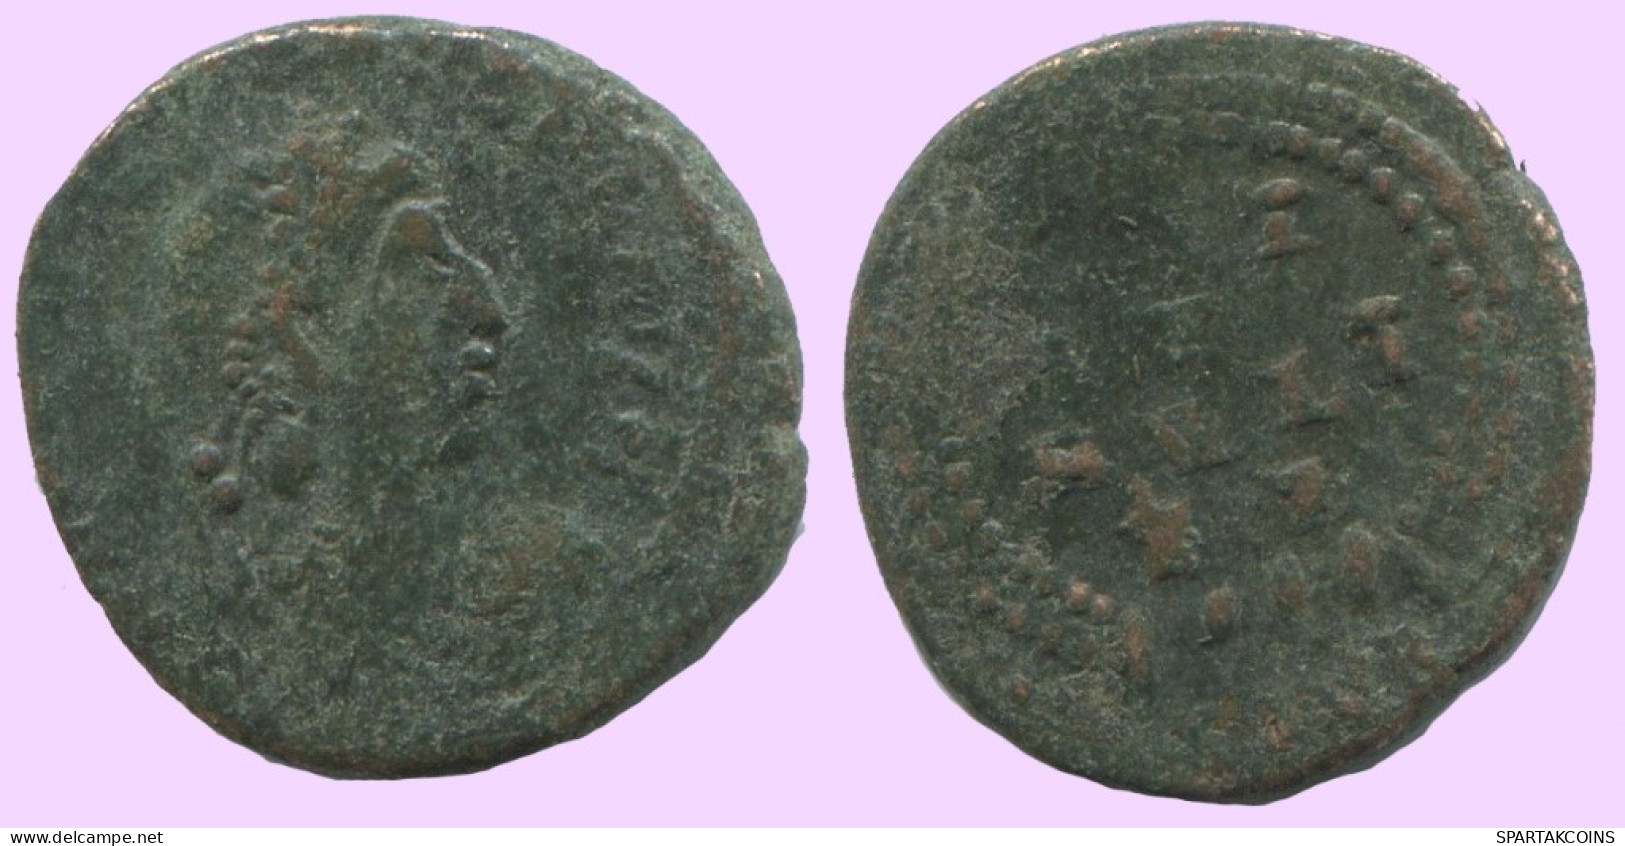 LATE ROMAN EMPIRE Follis Ancient Authentic Roman Coin 1.2g/12mm #ANT2134.7.U.A - La Fin De L'Empire (363-476)